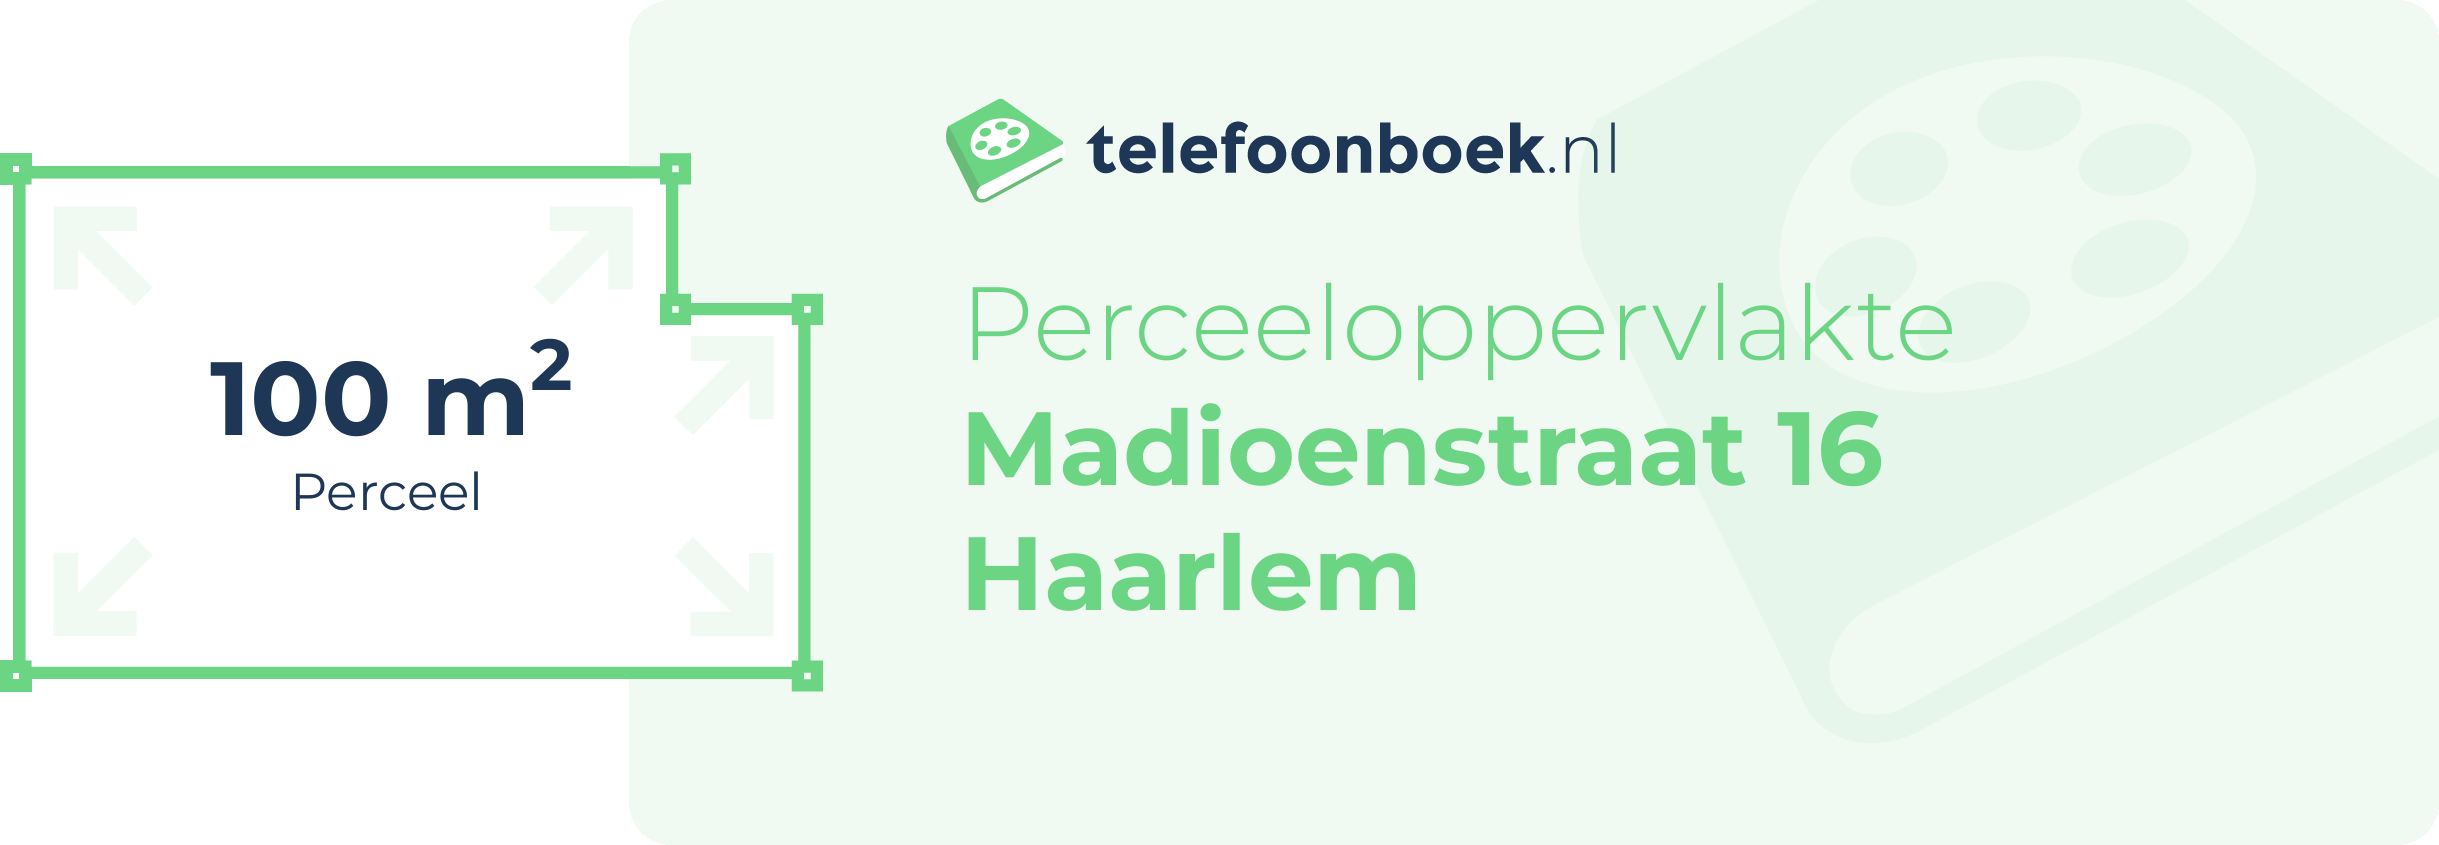 Perceeloppervlakte Madioenstraat 16 Haarlem